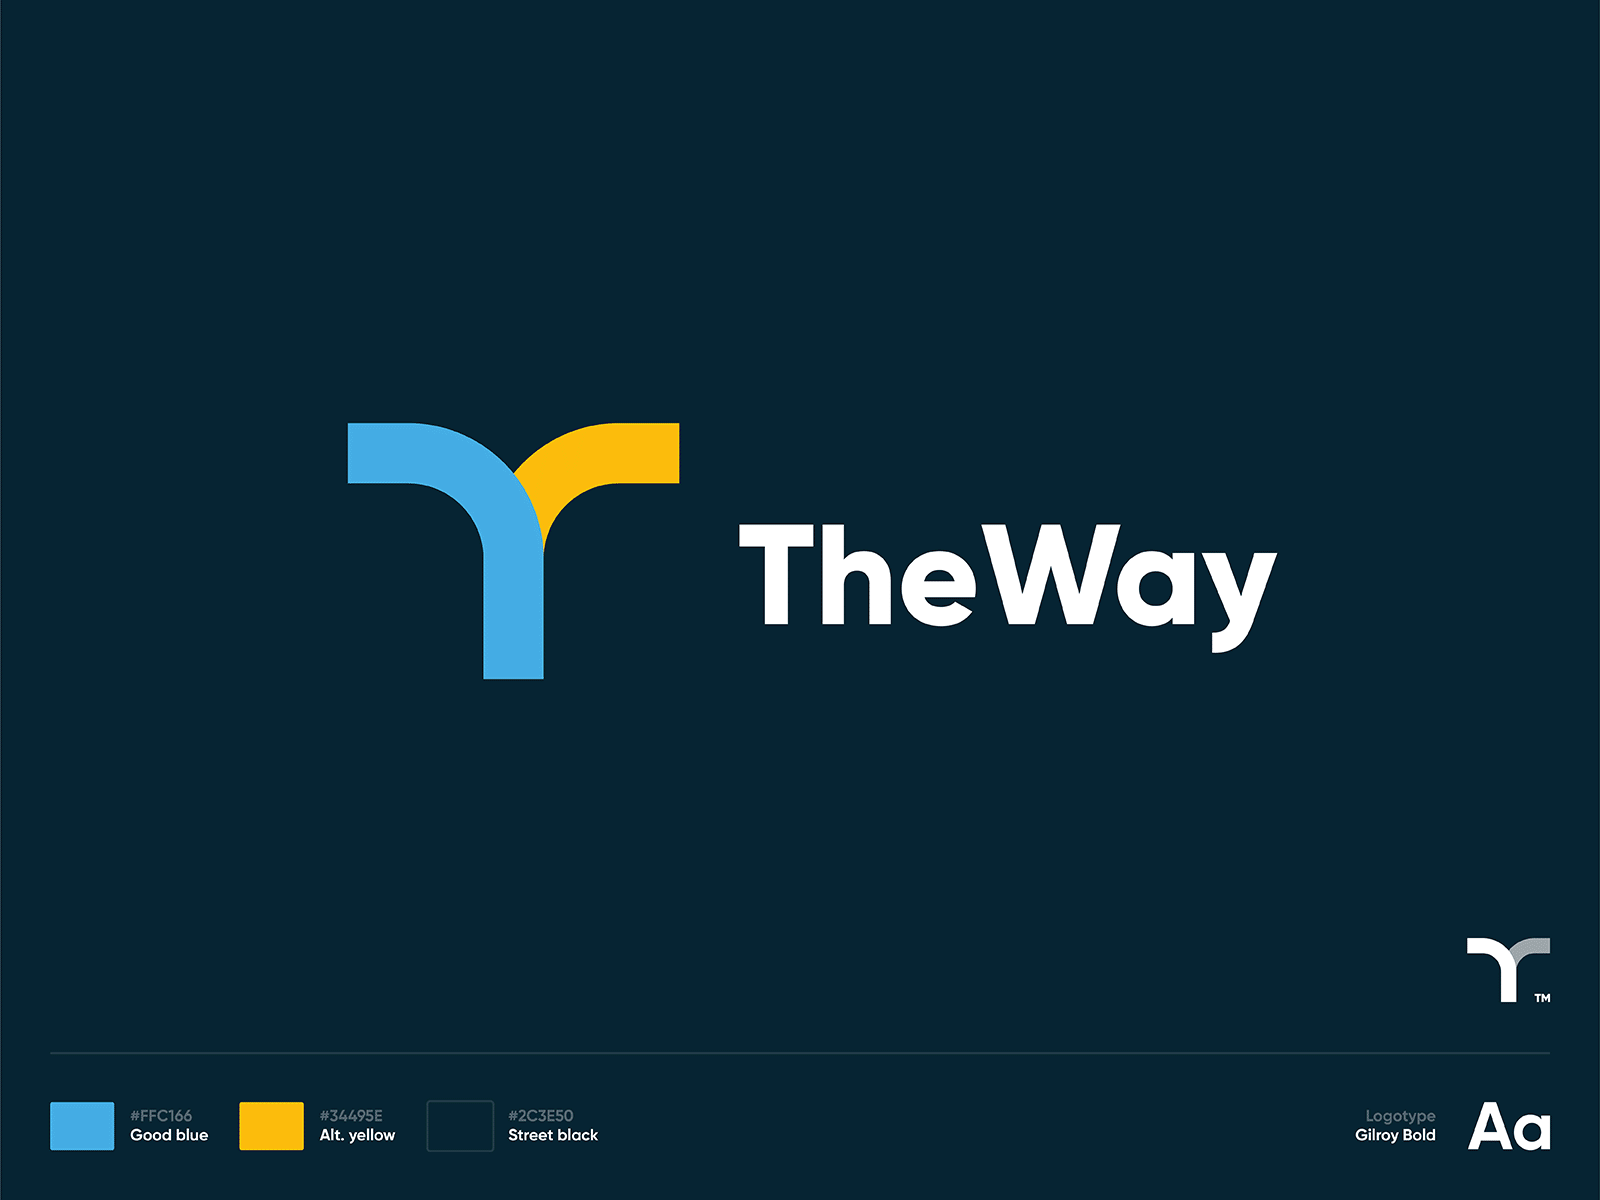 TheWay logo rebranded